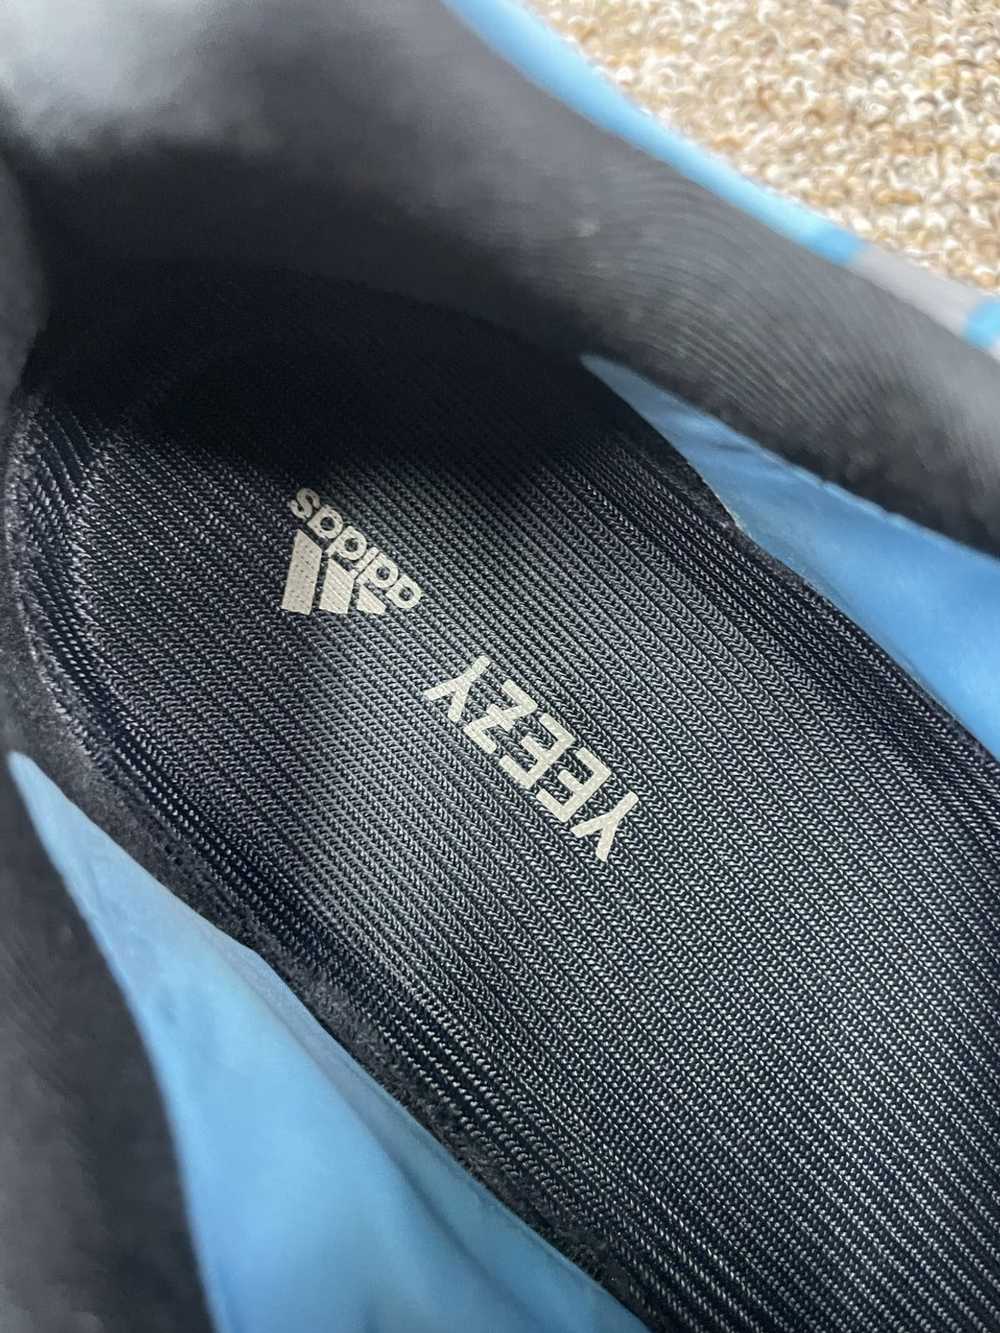 Adidas Yeezy Boost 700 Mnvn Bright Cyan - image 10